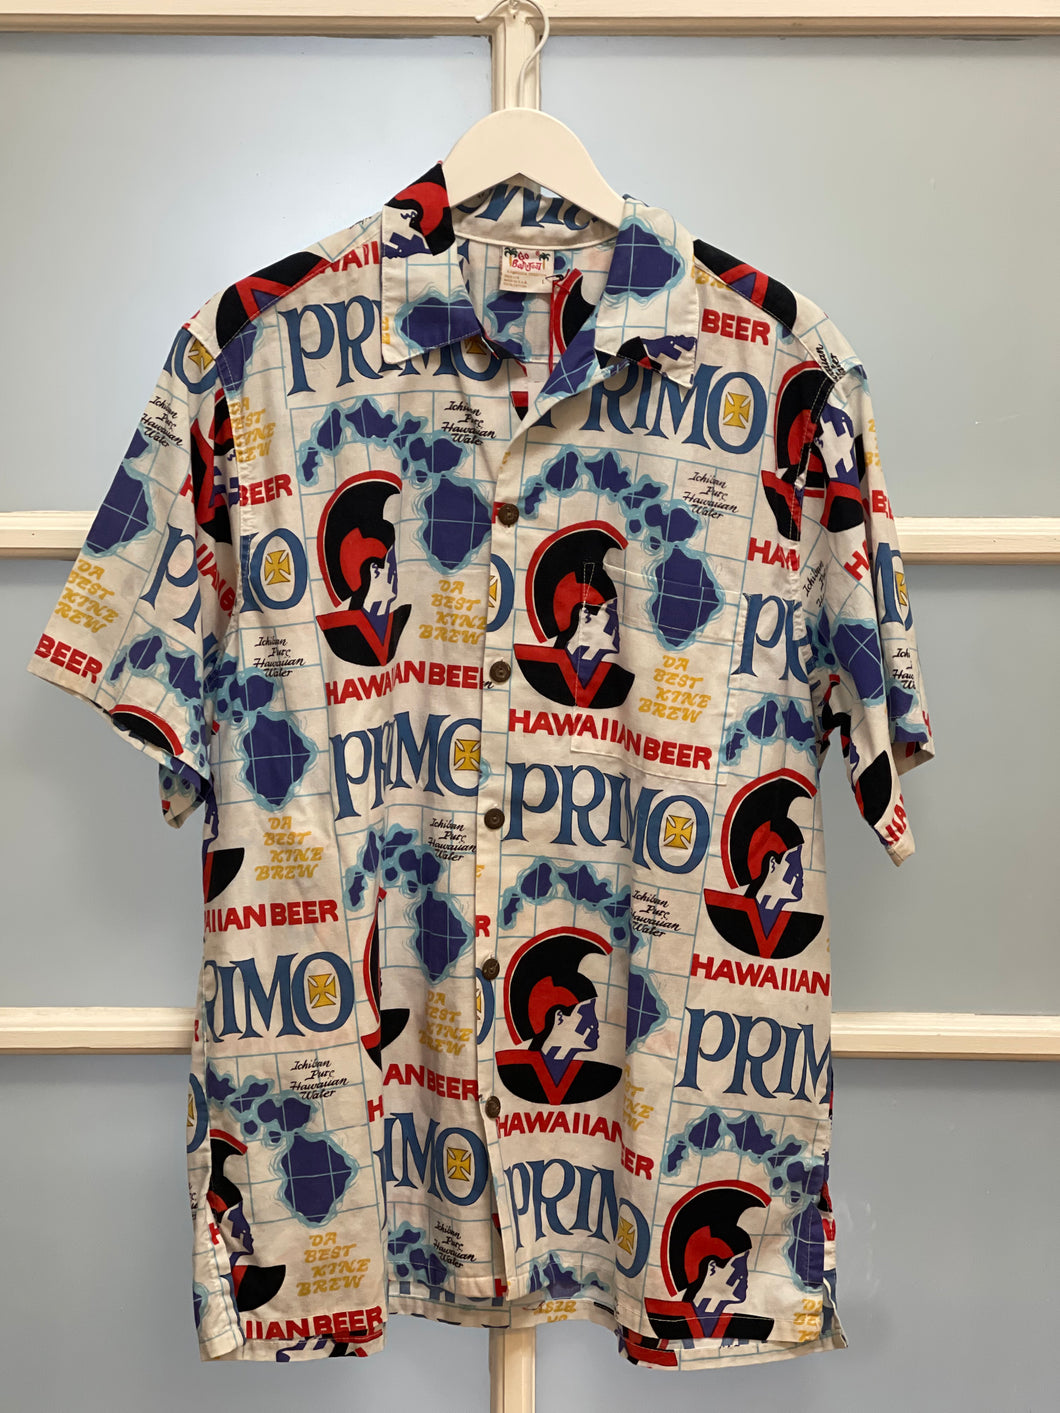 Ohanalei Vintage - Hawaii “Primo” Aloha Shirt